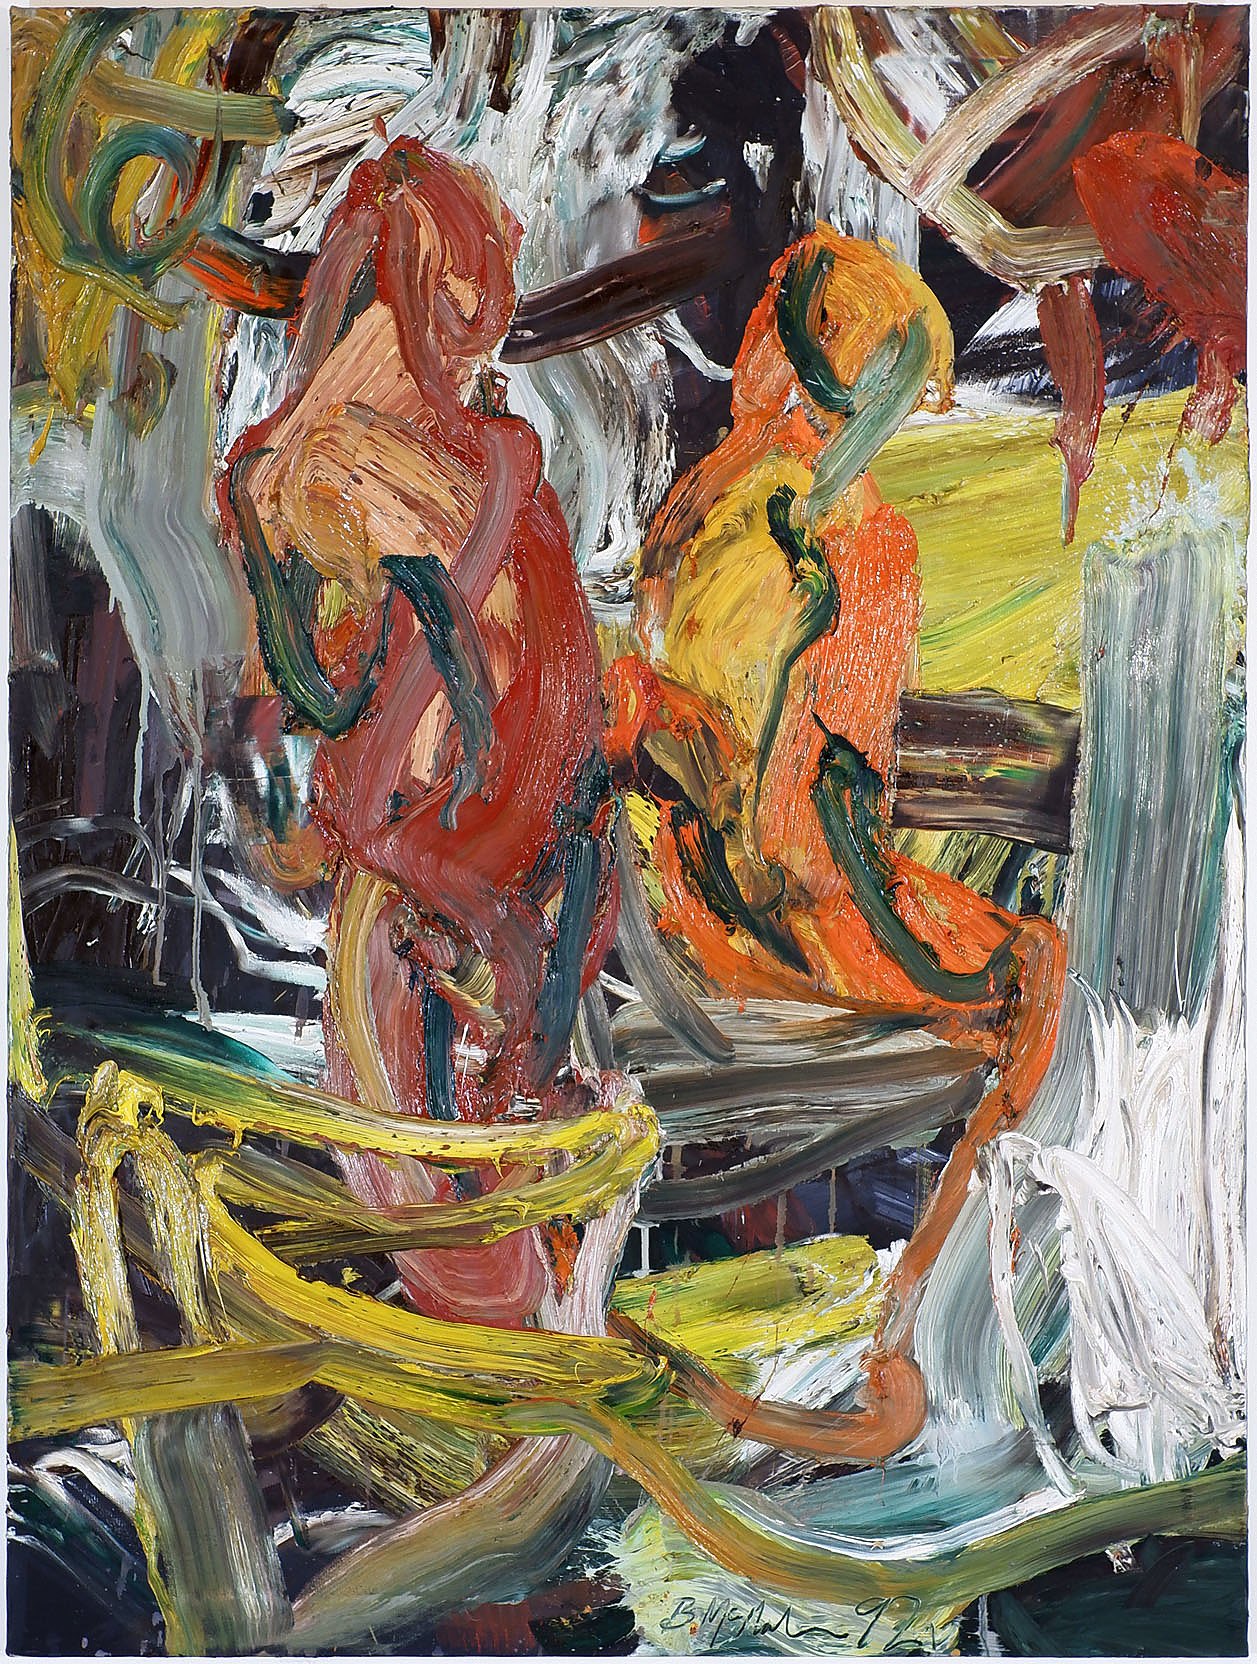 'Brett McMahon (b. 1966), Central Station 1992, Oil on Canvas'